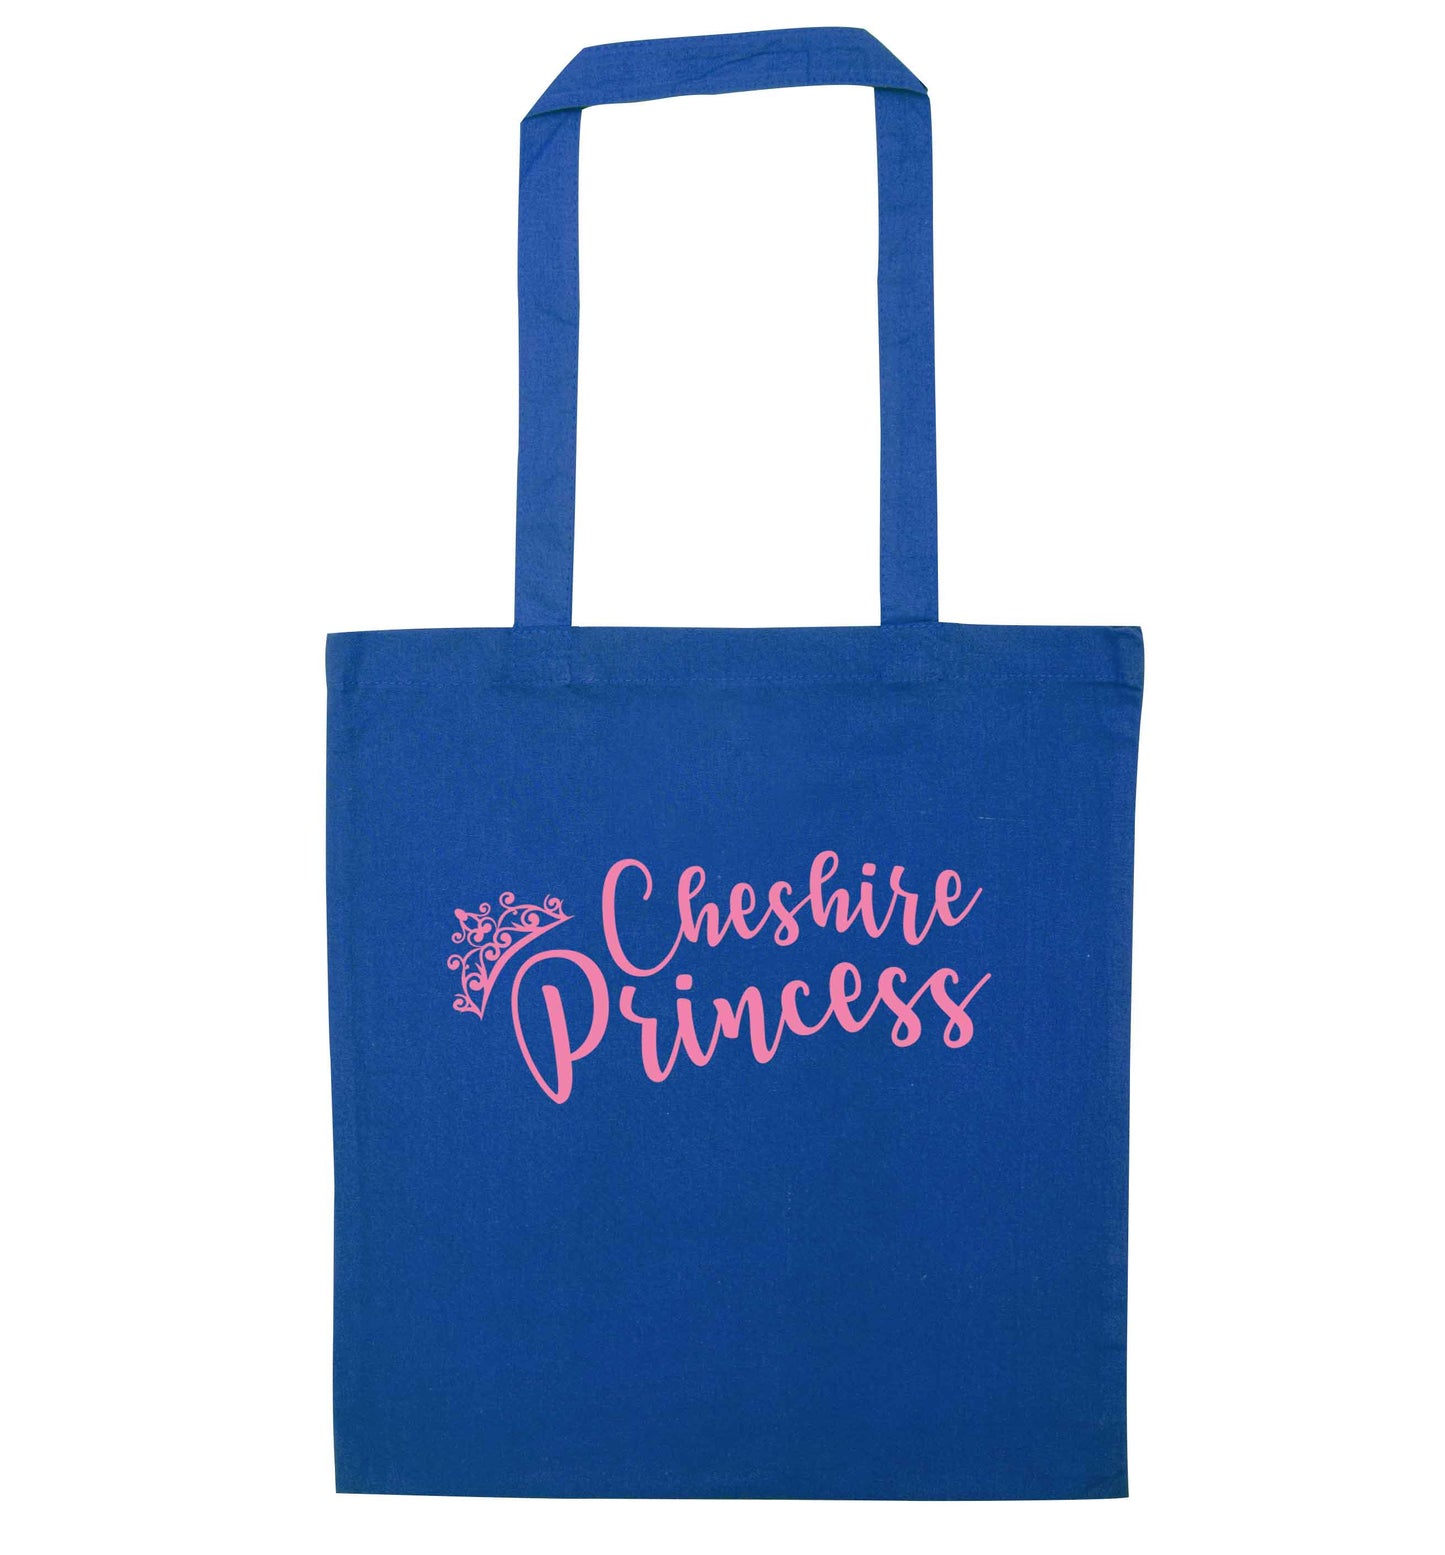 Cheshire princess blue tote bag